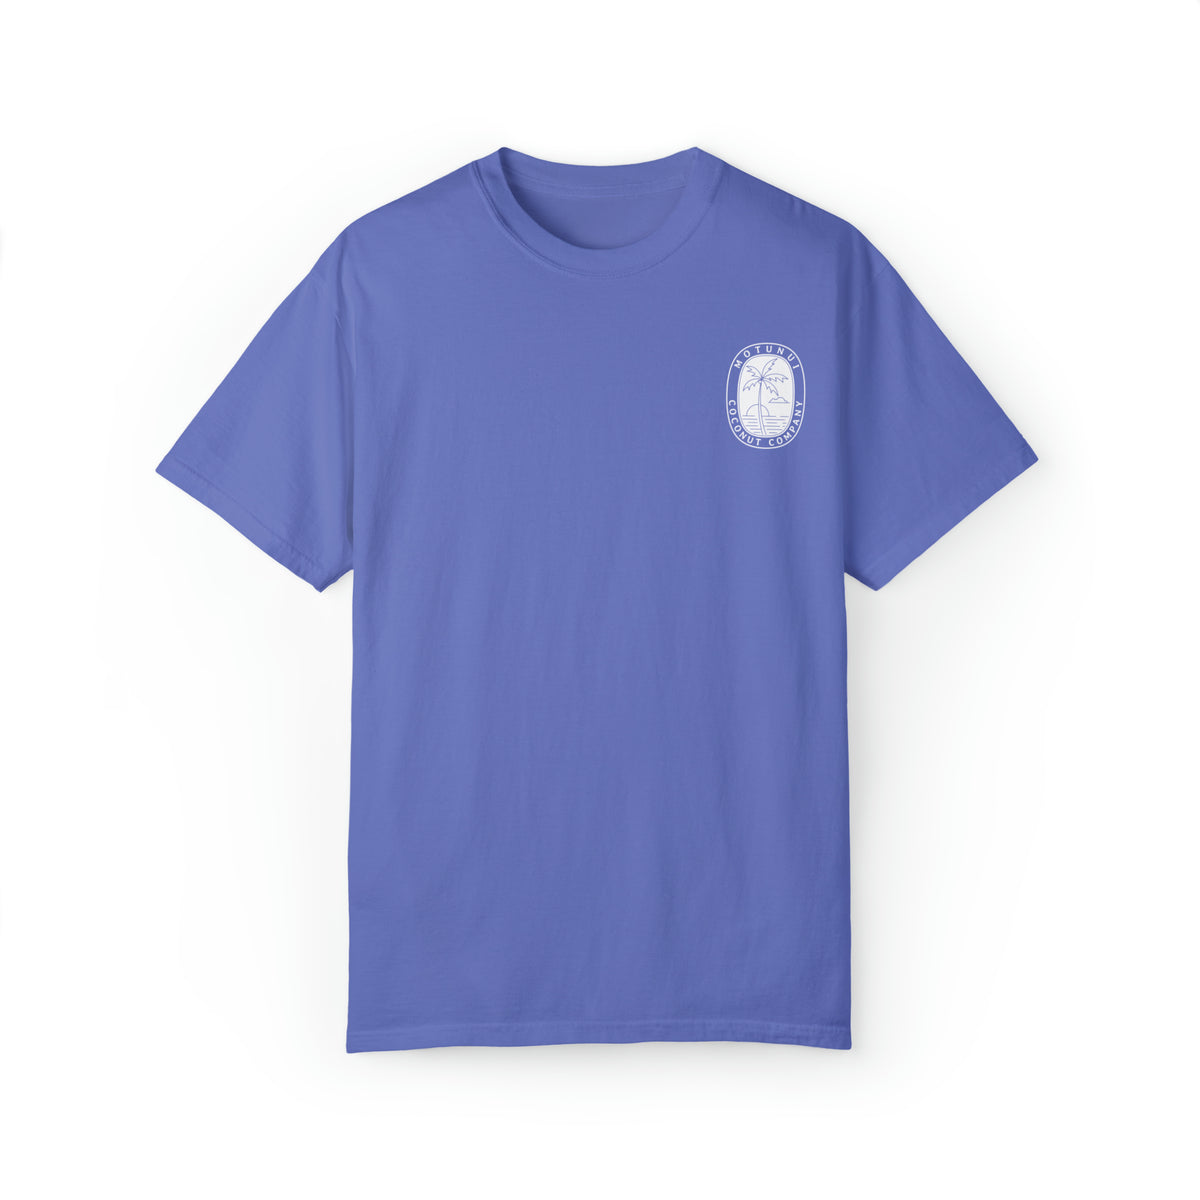 Motunui Coconut Company Comfort Colors Unisex Garment-Dyed T-shirt